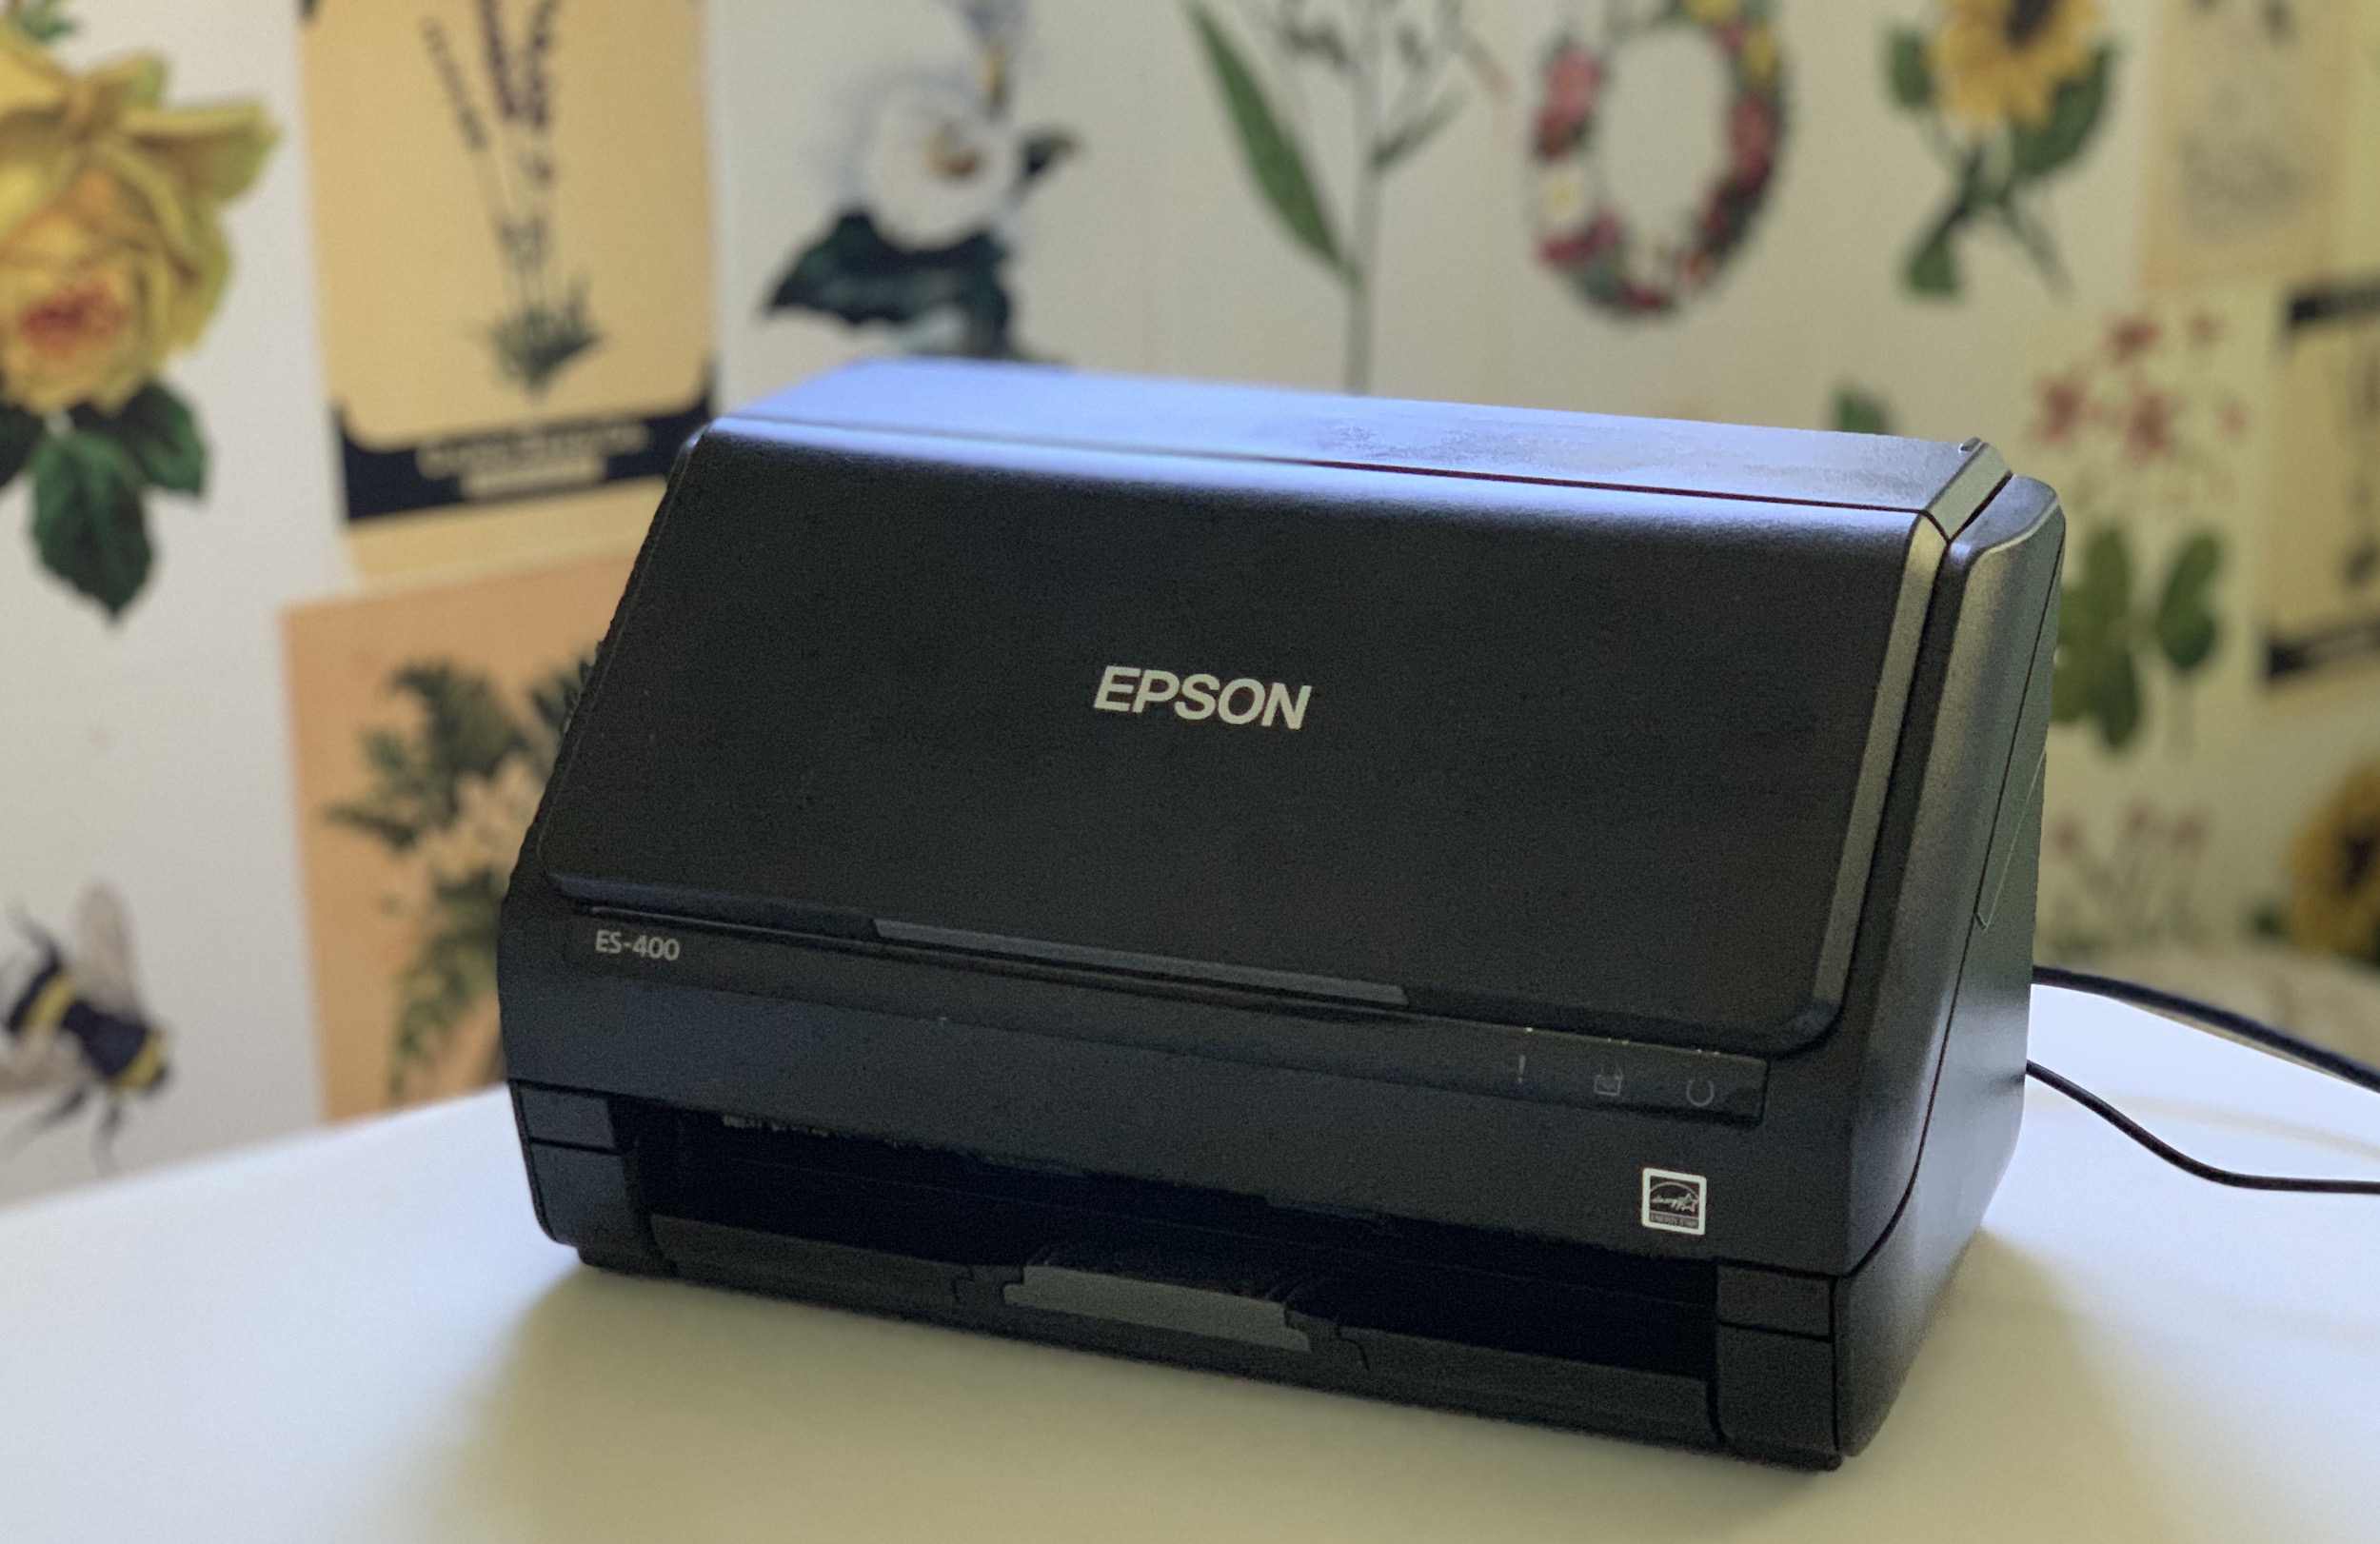 Epson ES-400 scanner closed